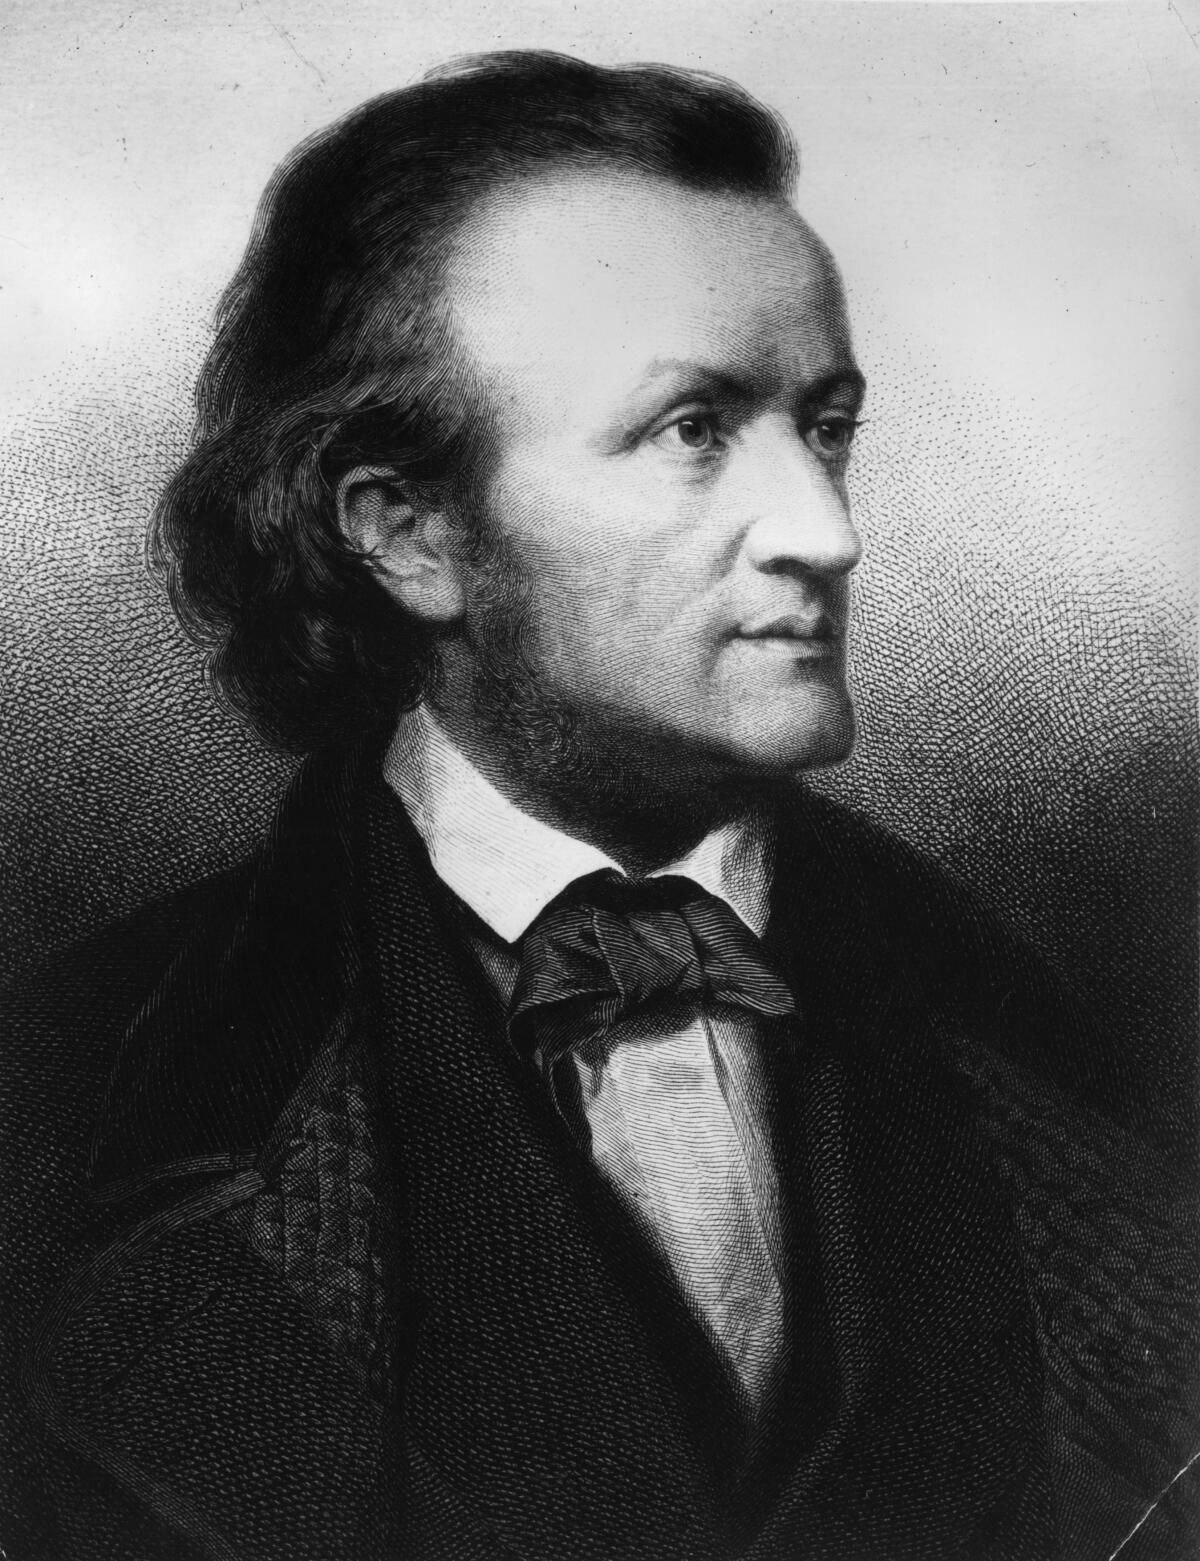 Richard Wagner: Biography, Composer, Anti-Semitic Writings